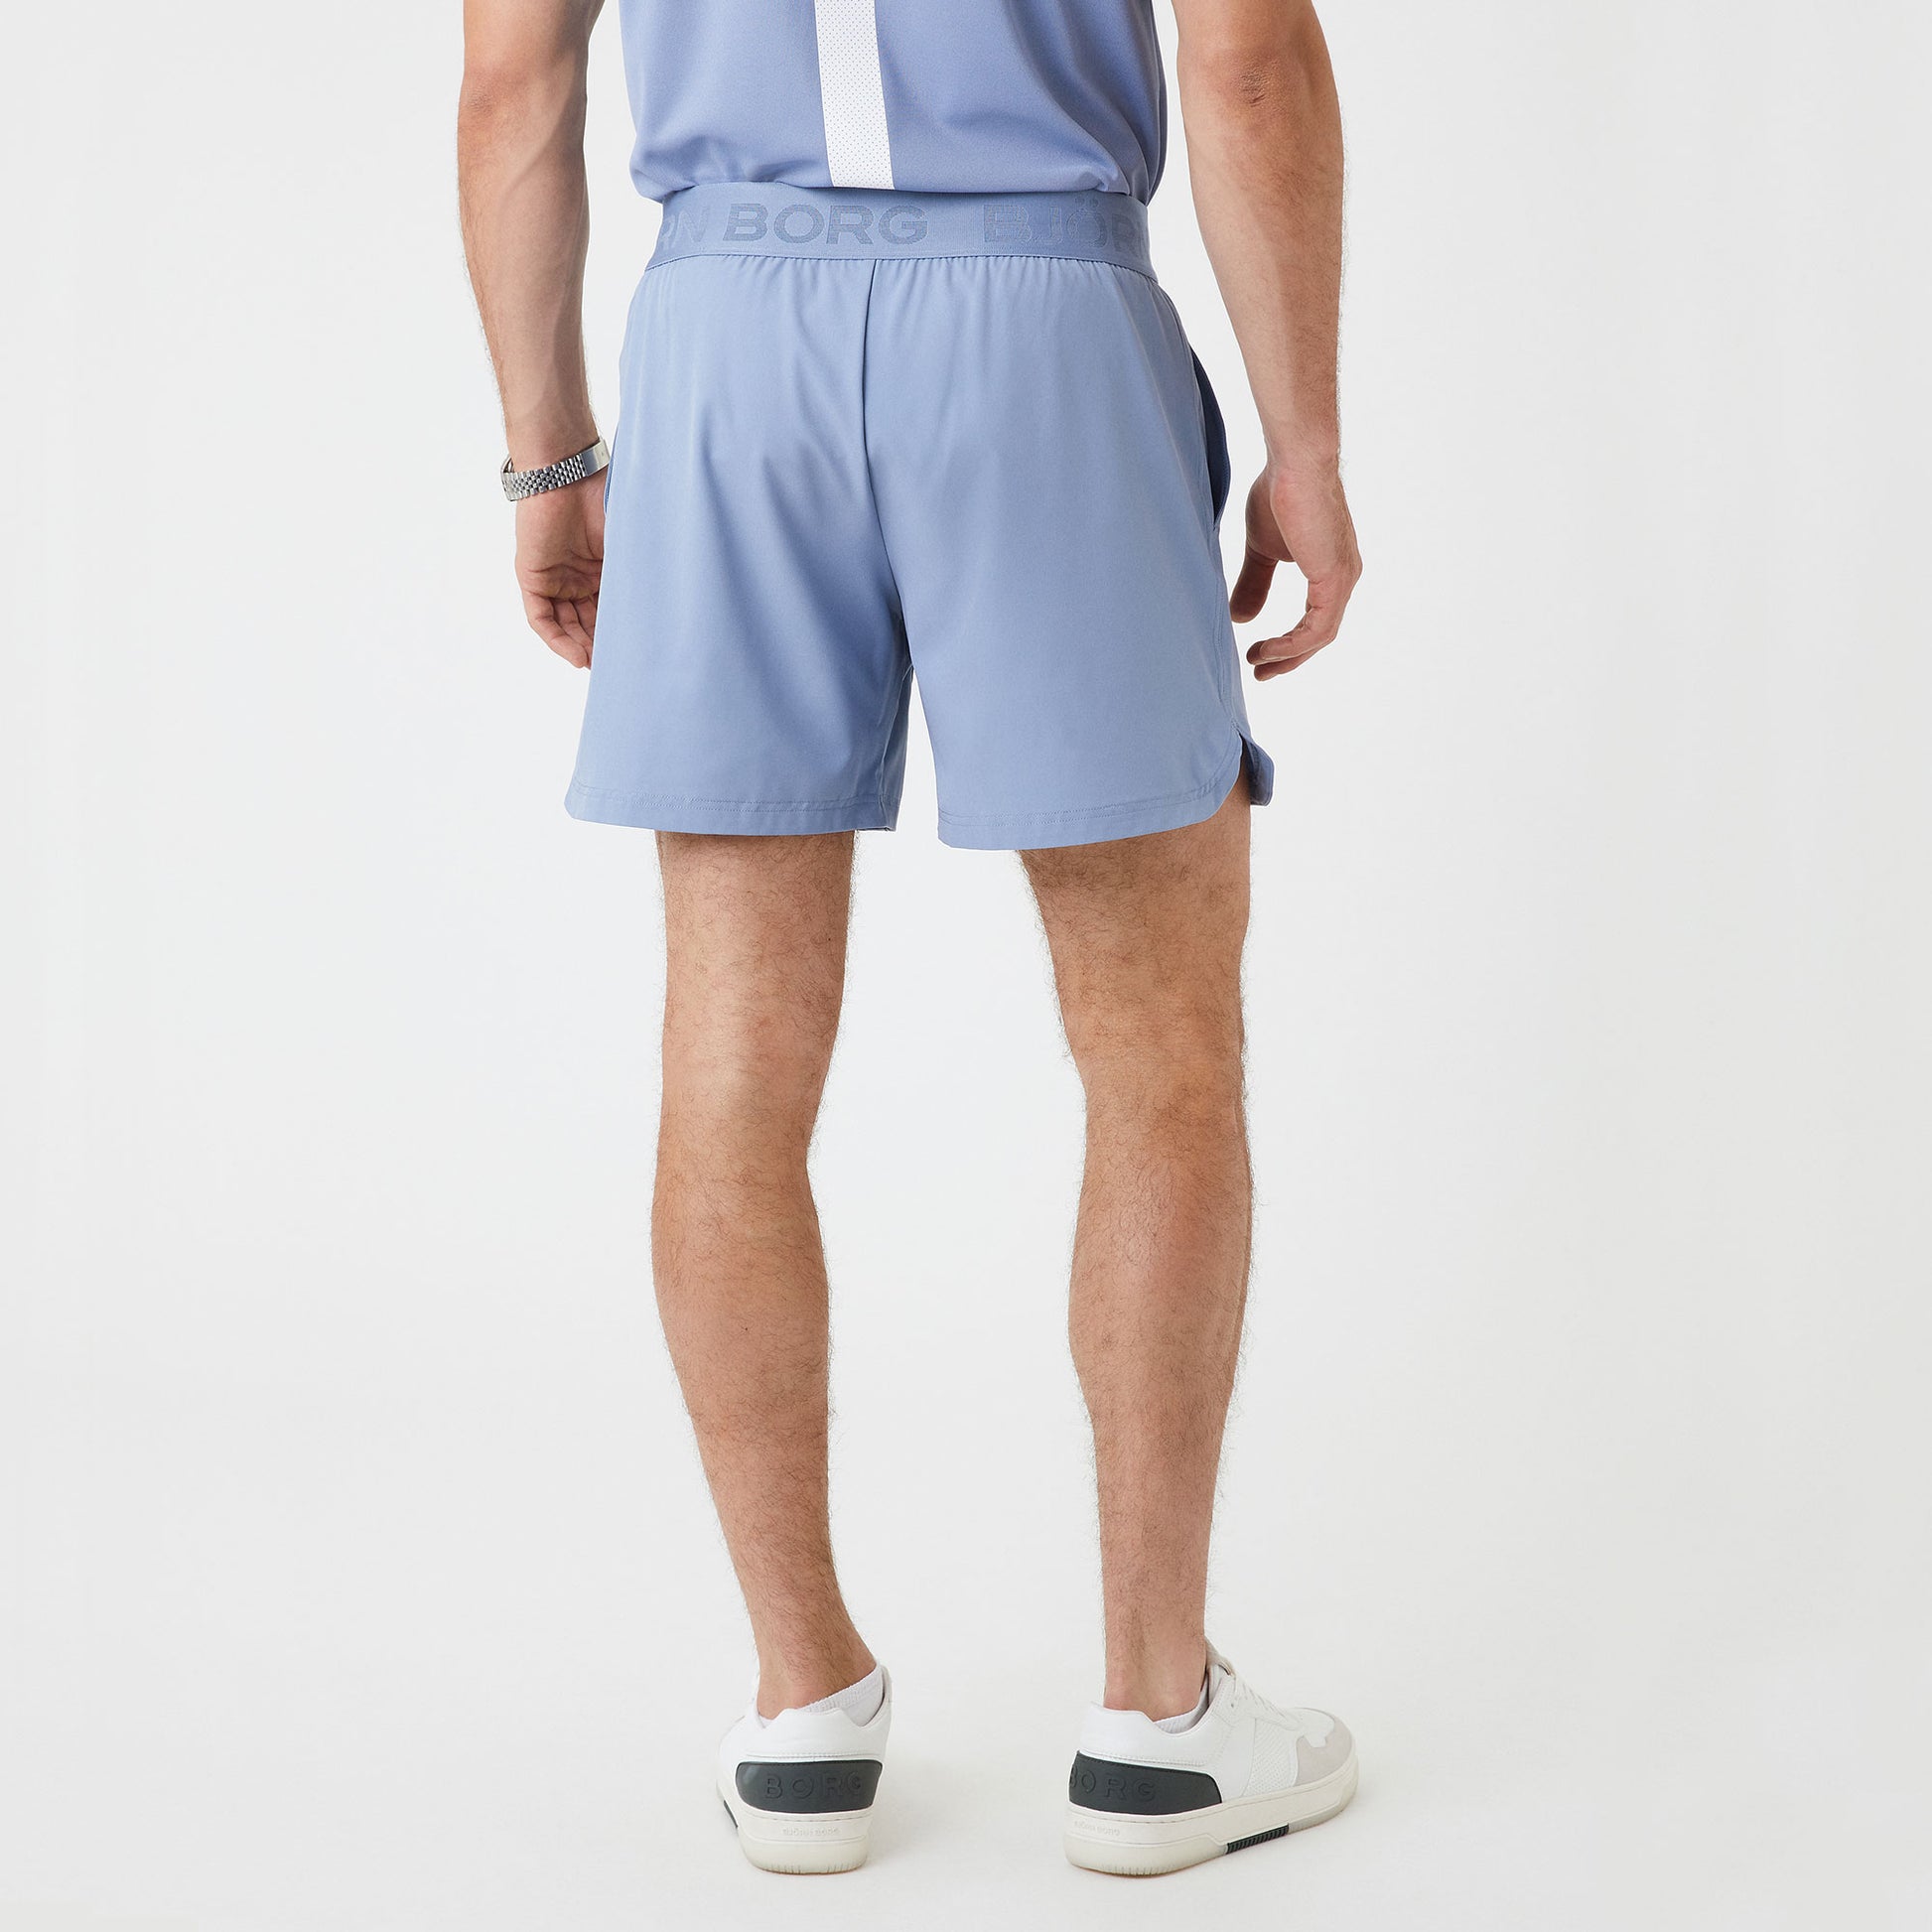 Björn Borg Ace Men's 7-Inch Tennis Shorts Blue (2)